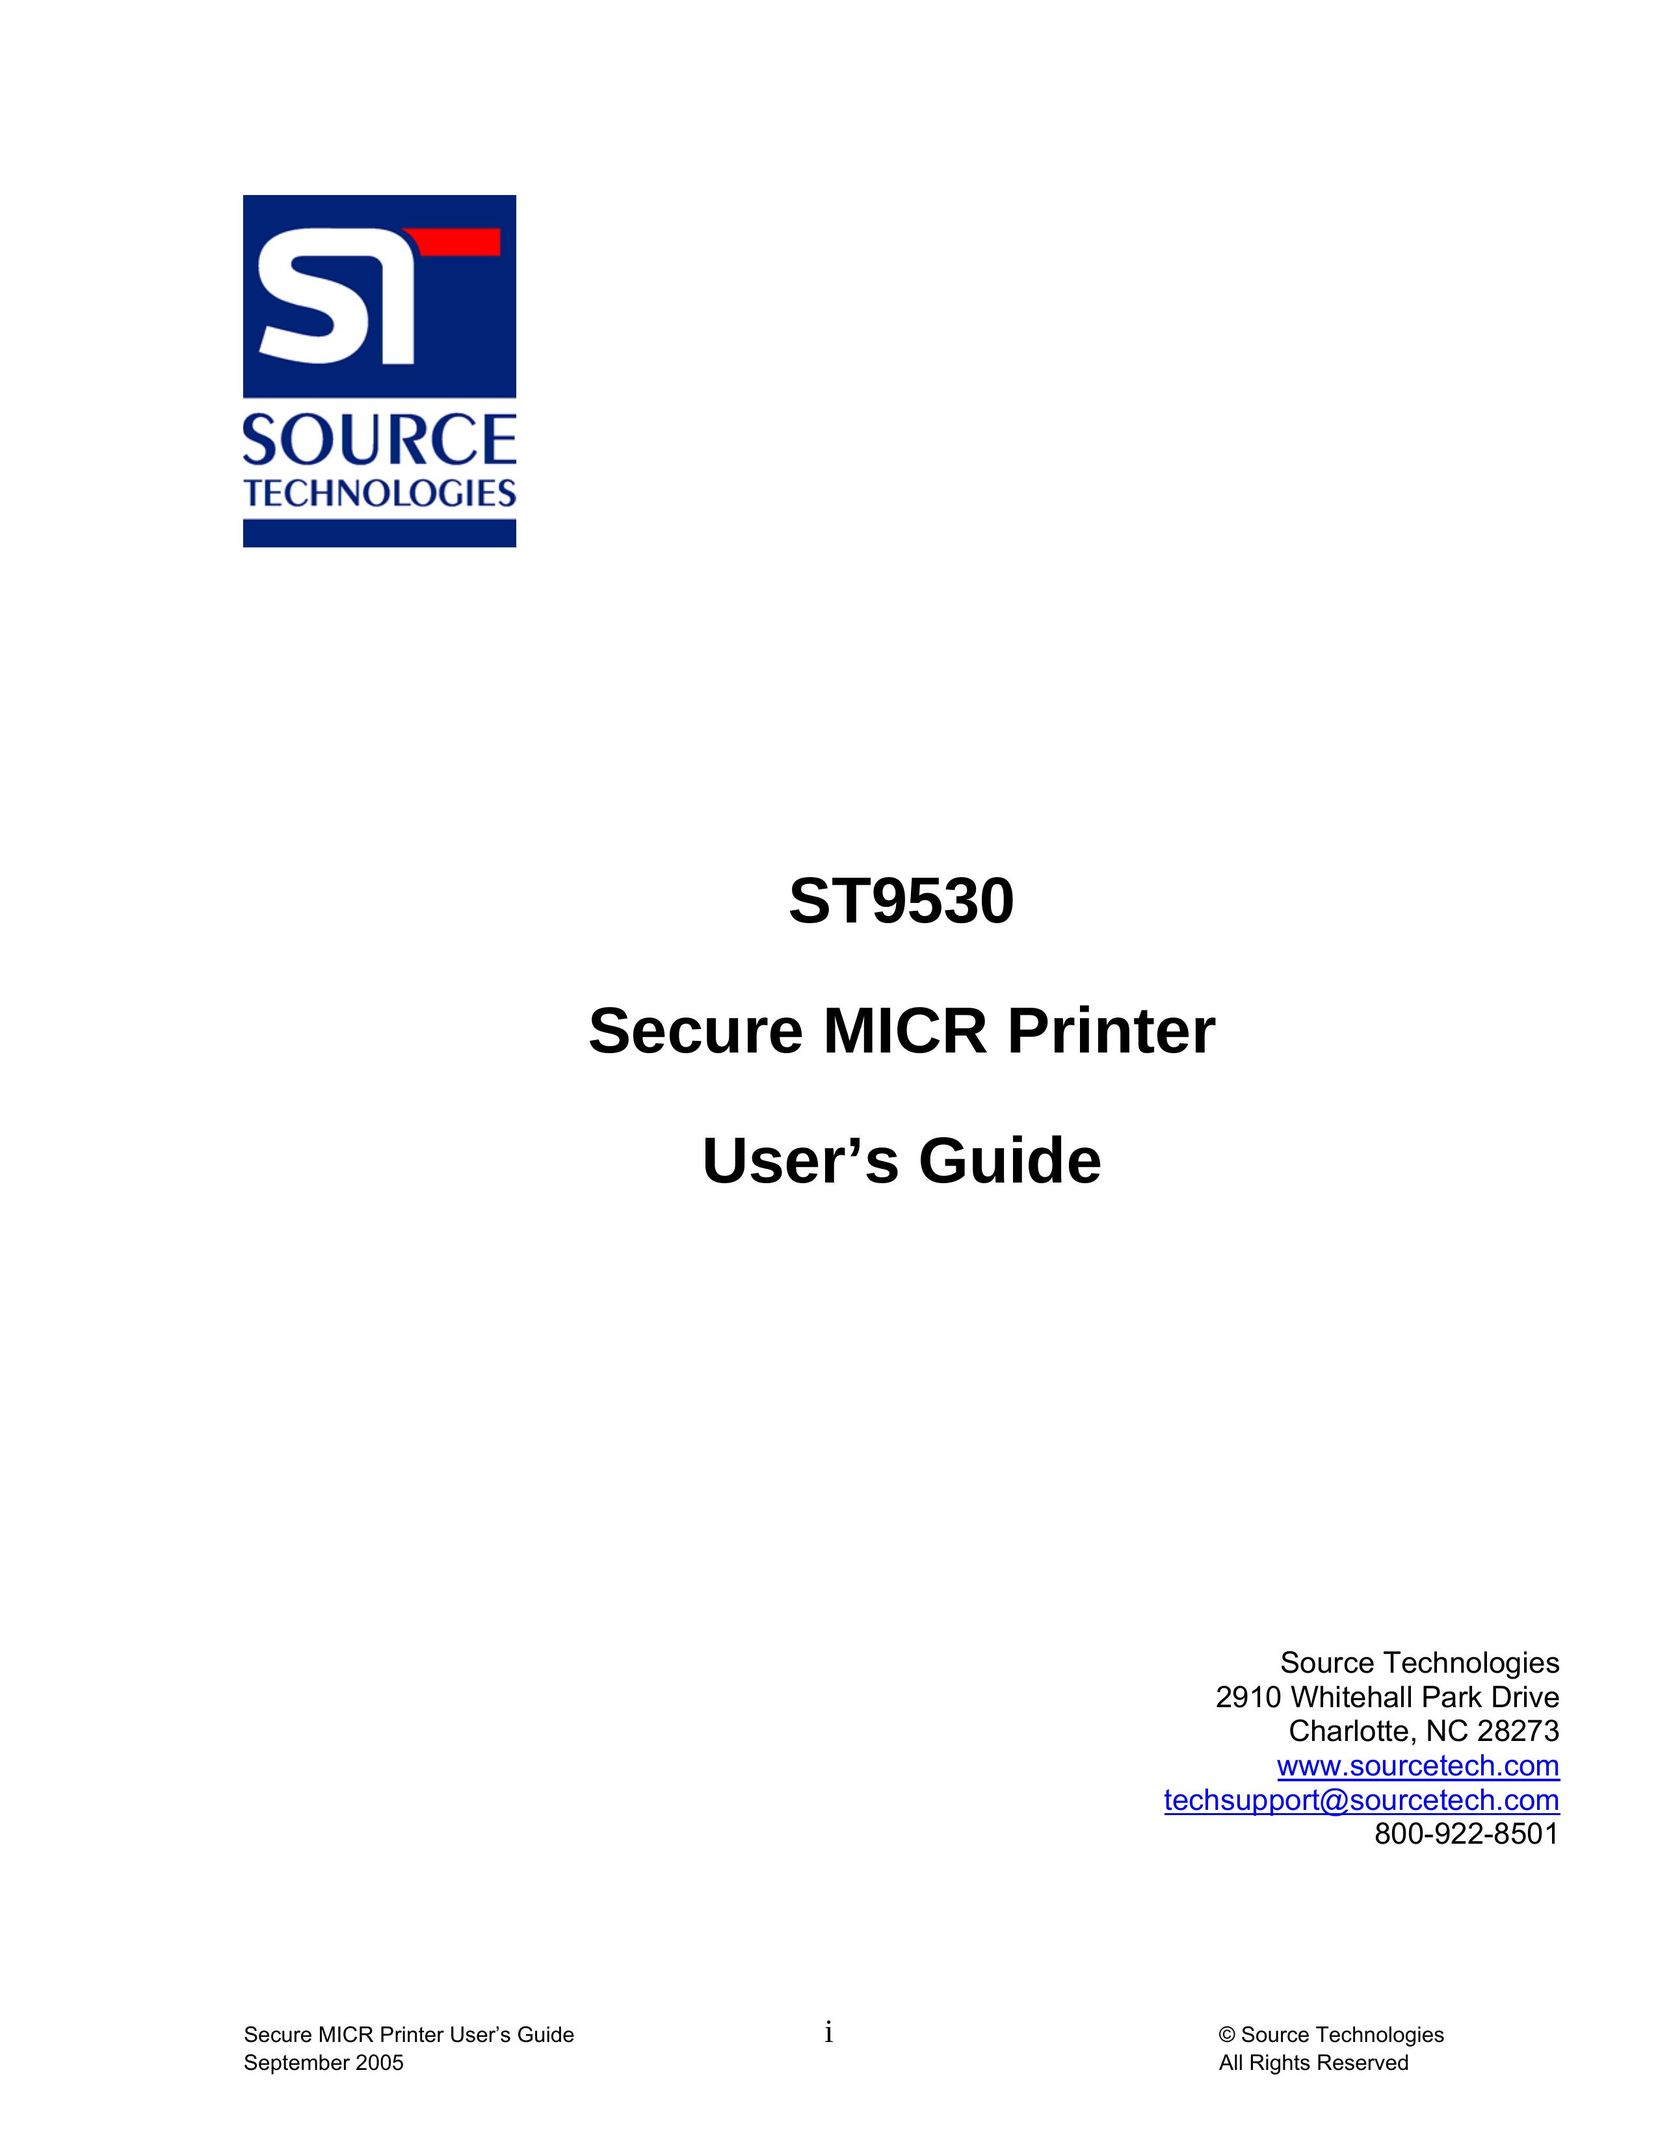 Source Technologies ST9530 Printer User Manual